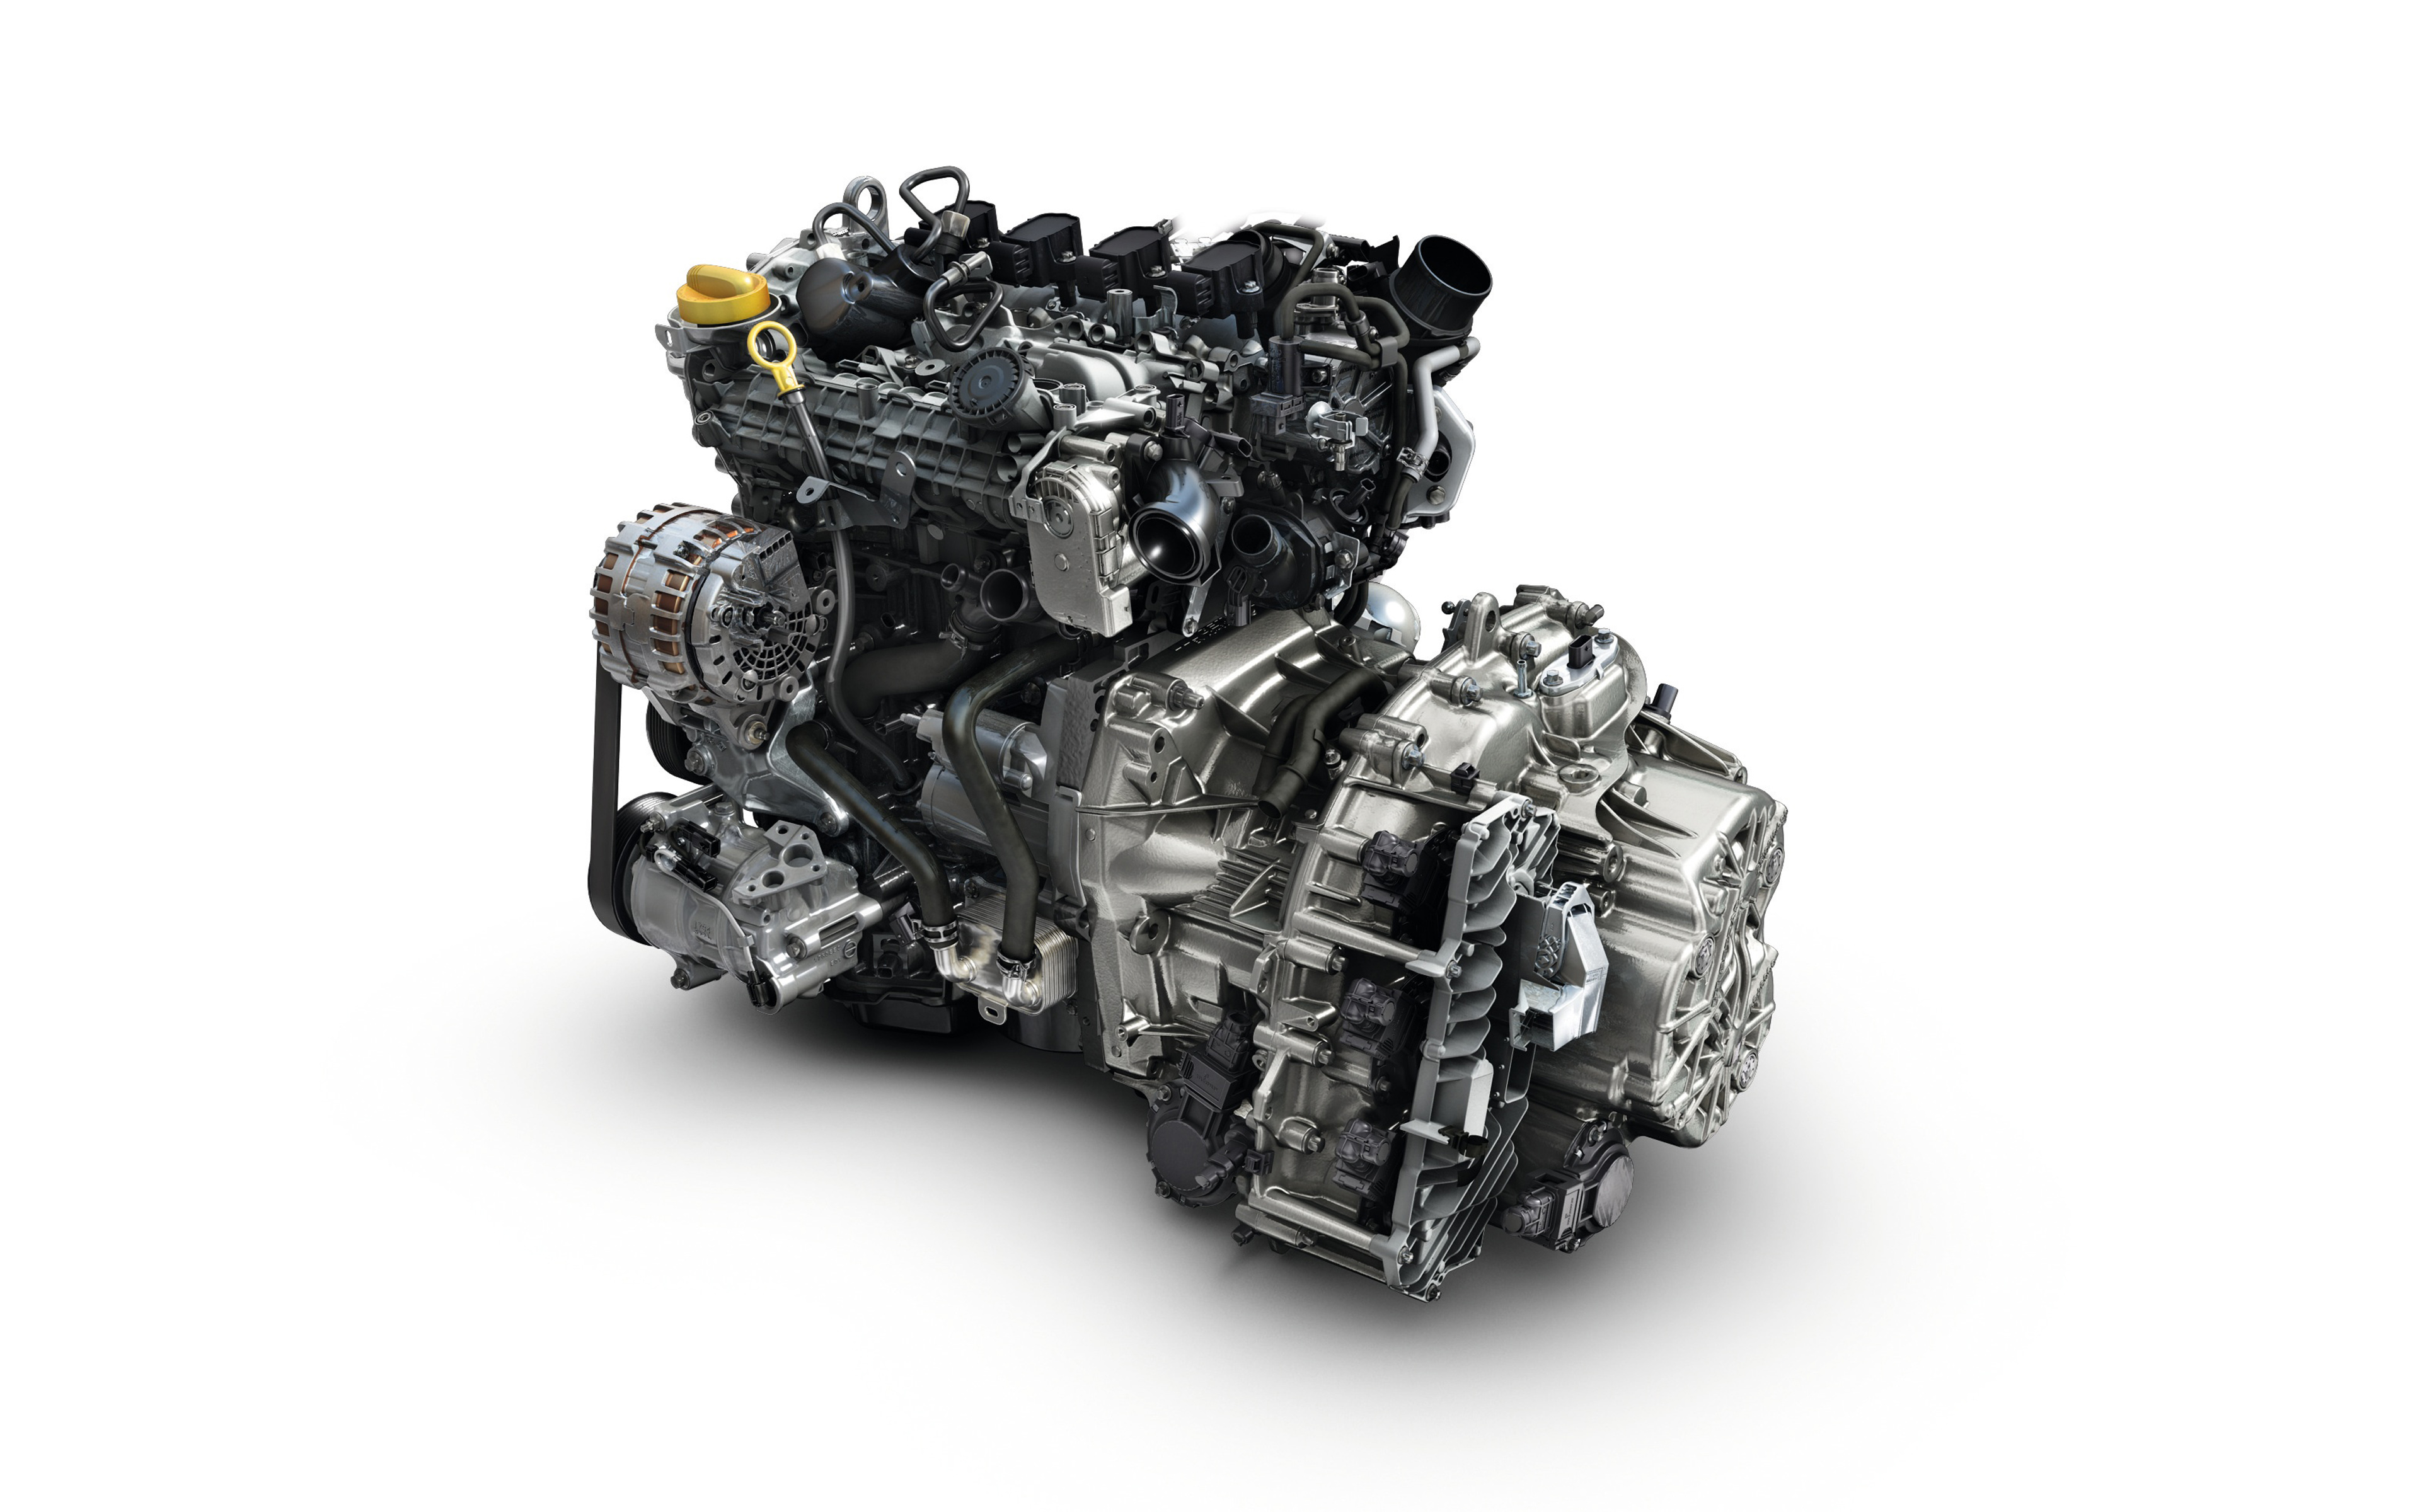 Download wallpaper modern engine, Renault, car parts, generator